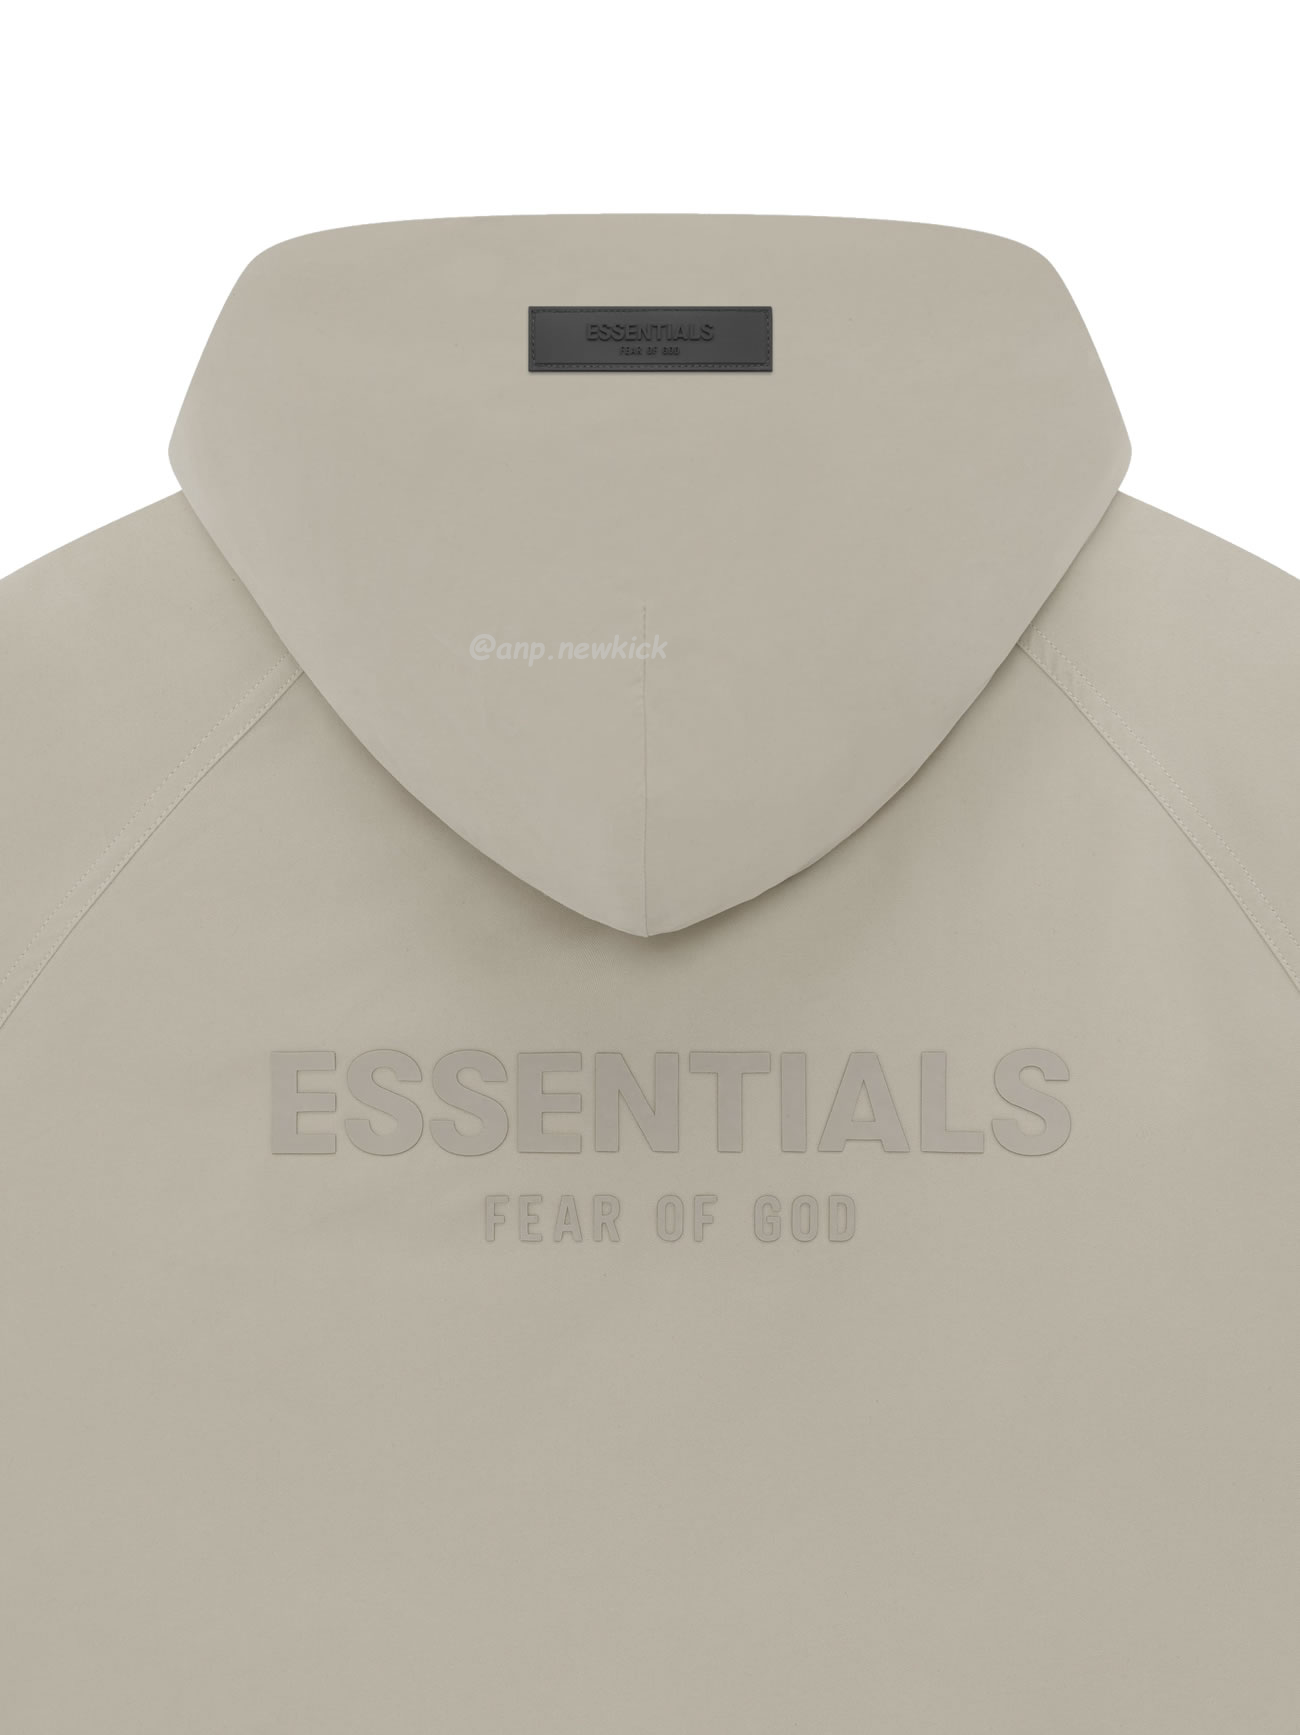 Fear Of God Essentials Fog 23fw Zipper Hooded Cotton Jacket Brown Black Elephant White S Xl (6) - newkick.org